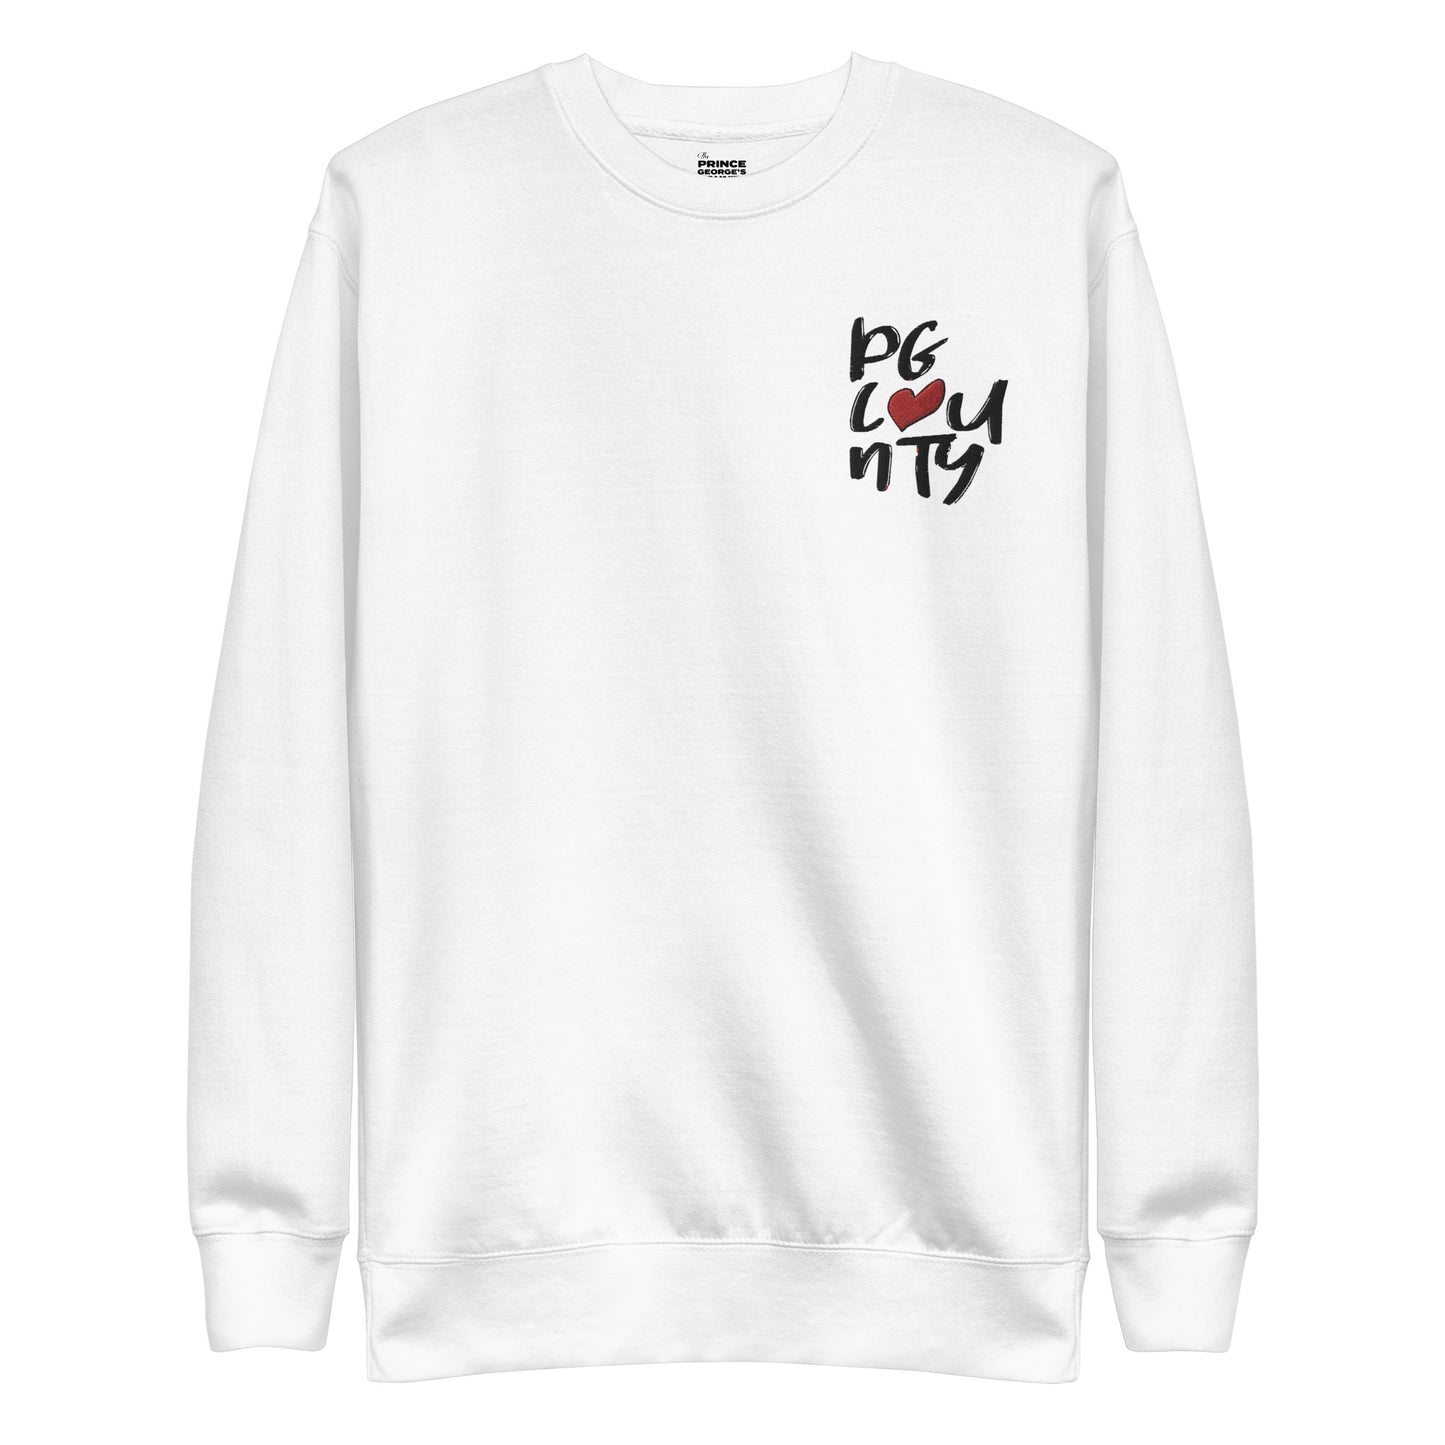 PG County Love Stitched Pocket Unisex Premium Sweatshirt